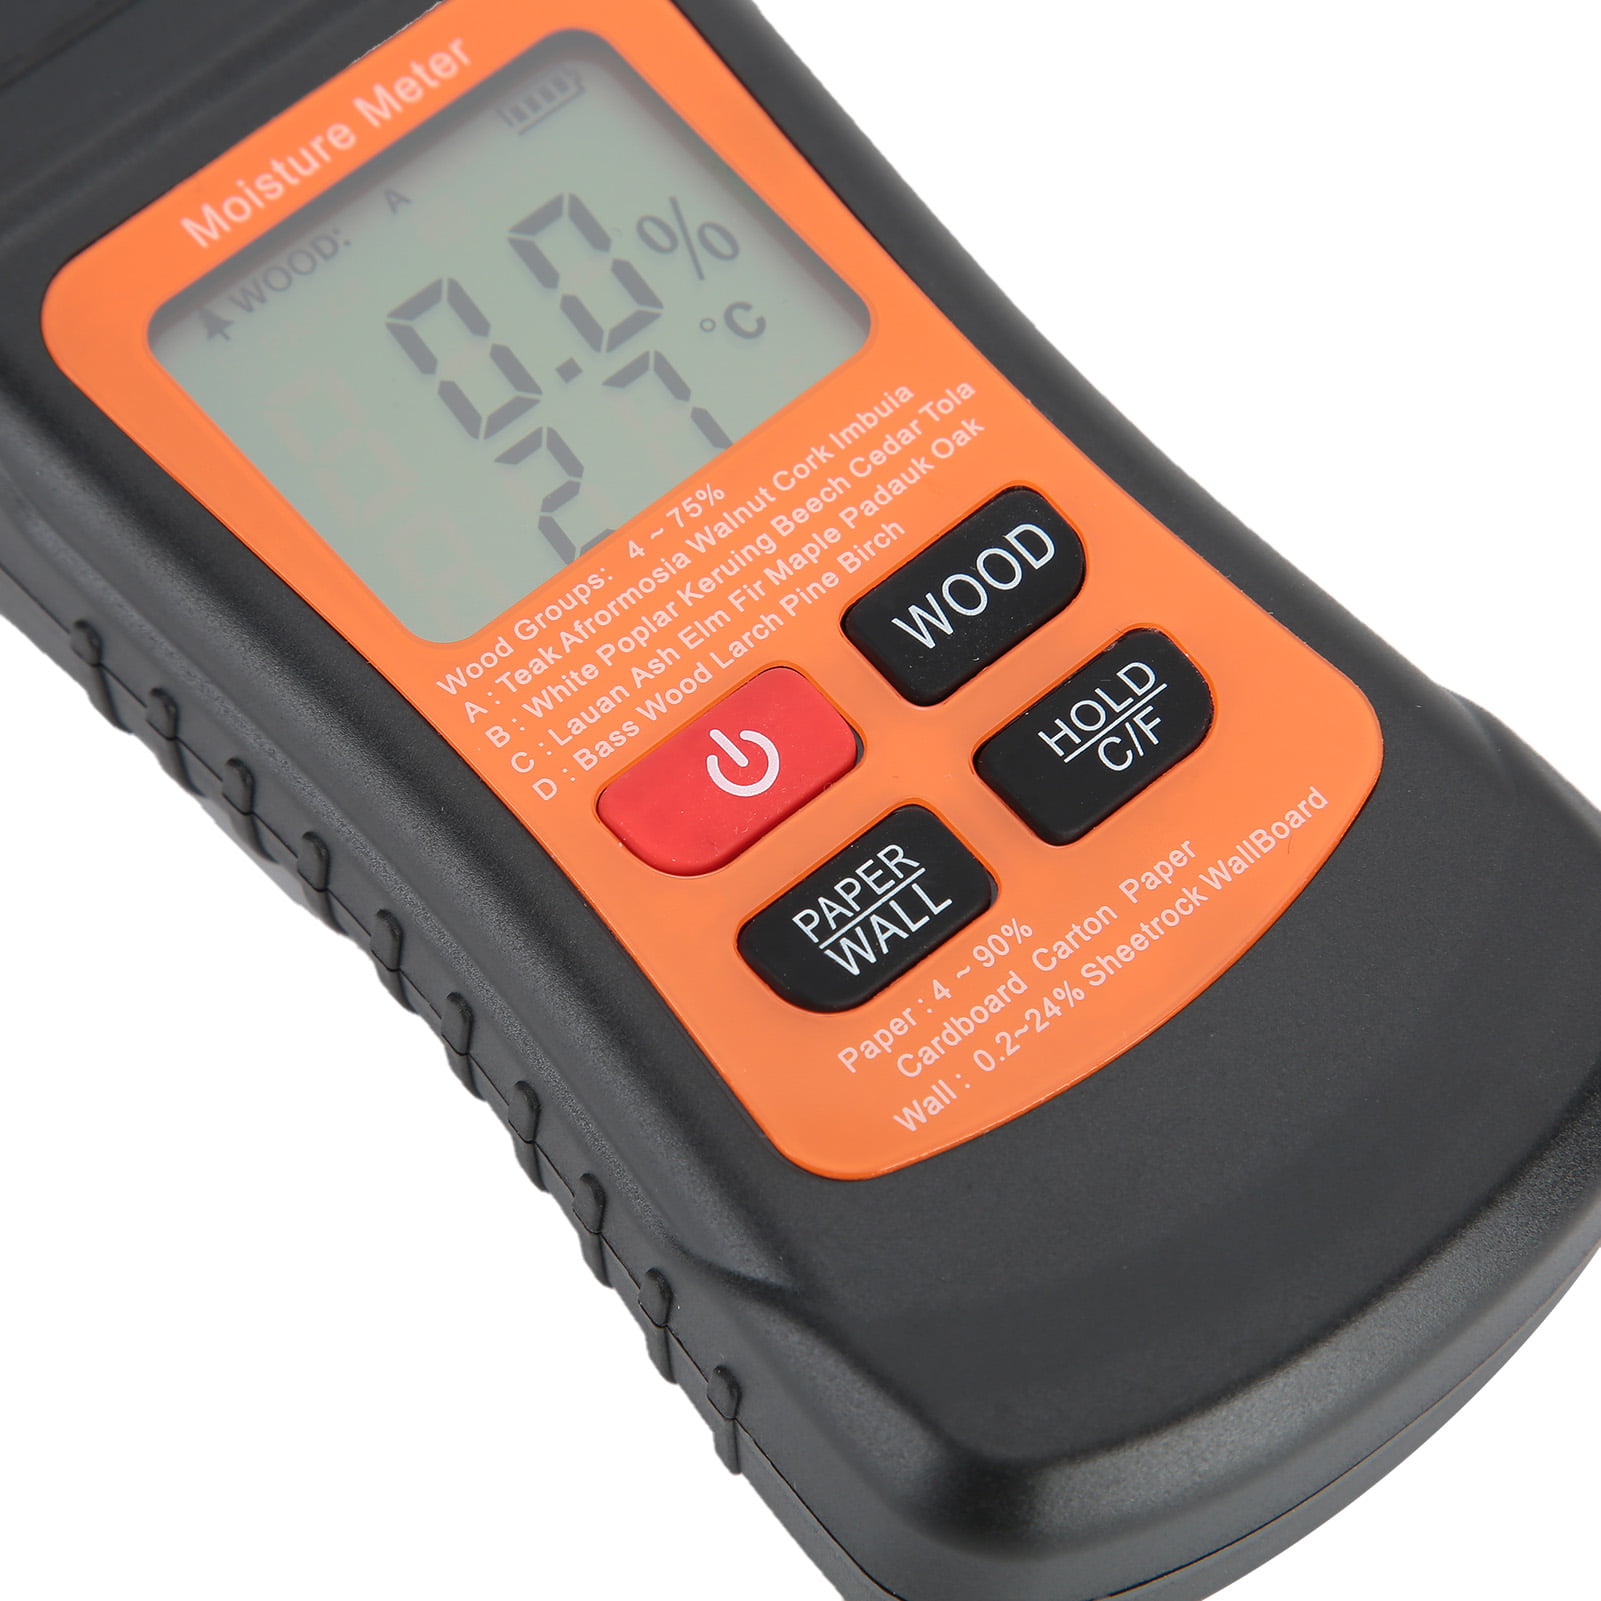 Damp Meter Moisture Detector Digital brennenstuhl MD 1298680 for sale online 